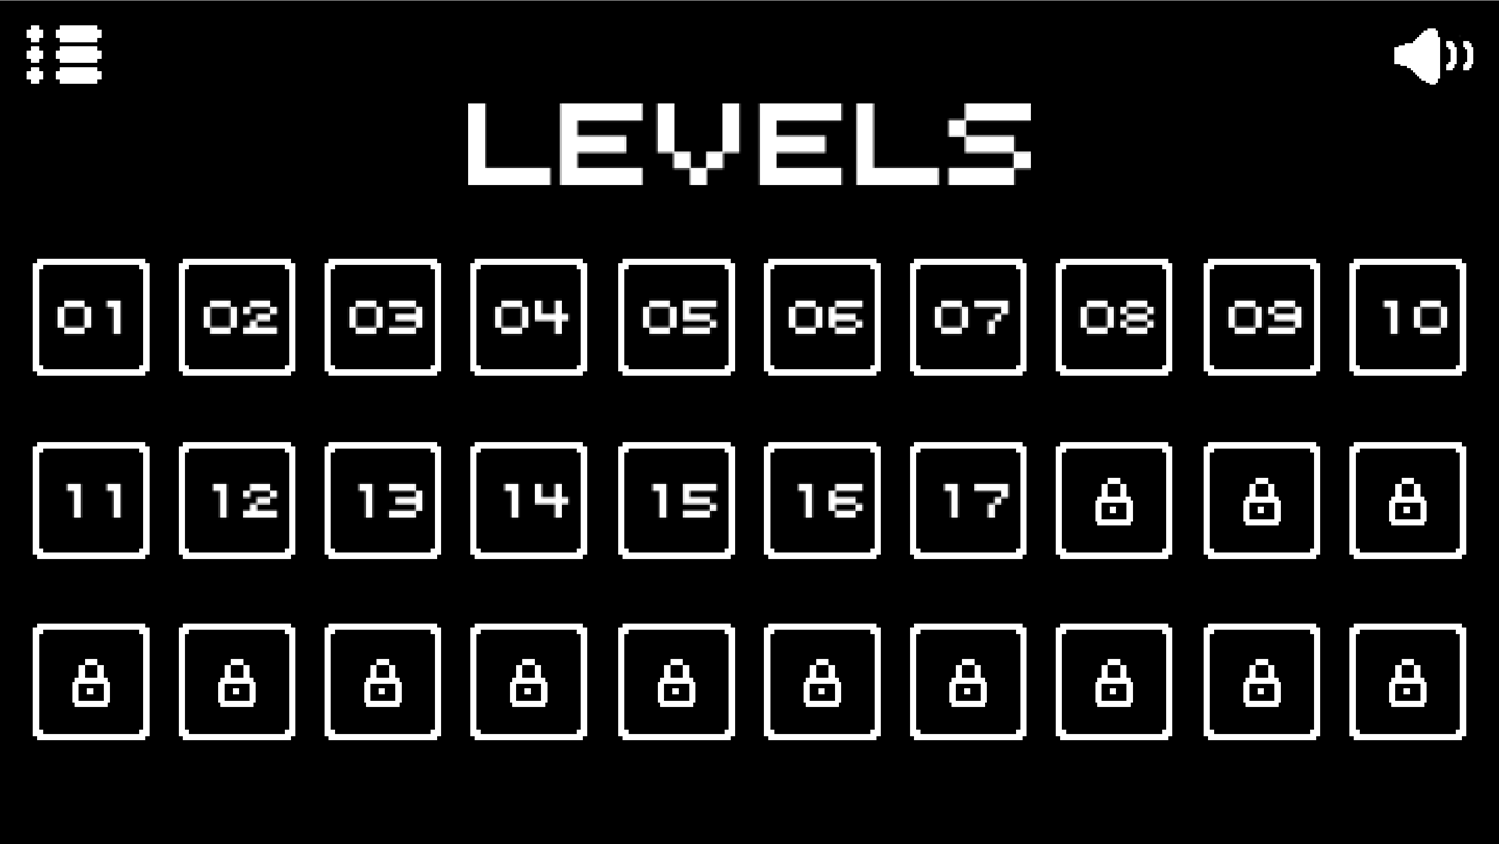 Pixel Dash Game Level Select Screen Screenshot.